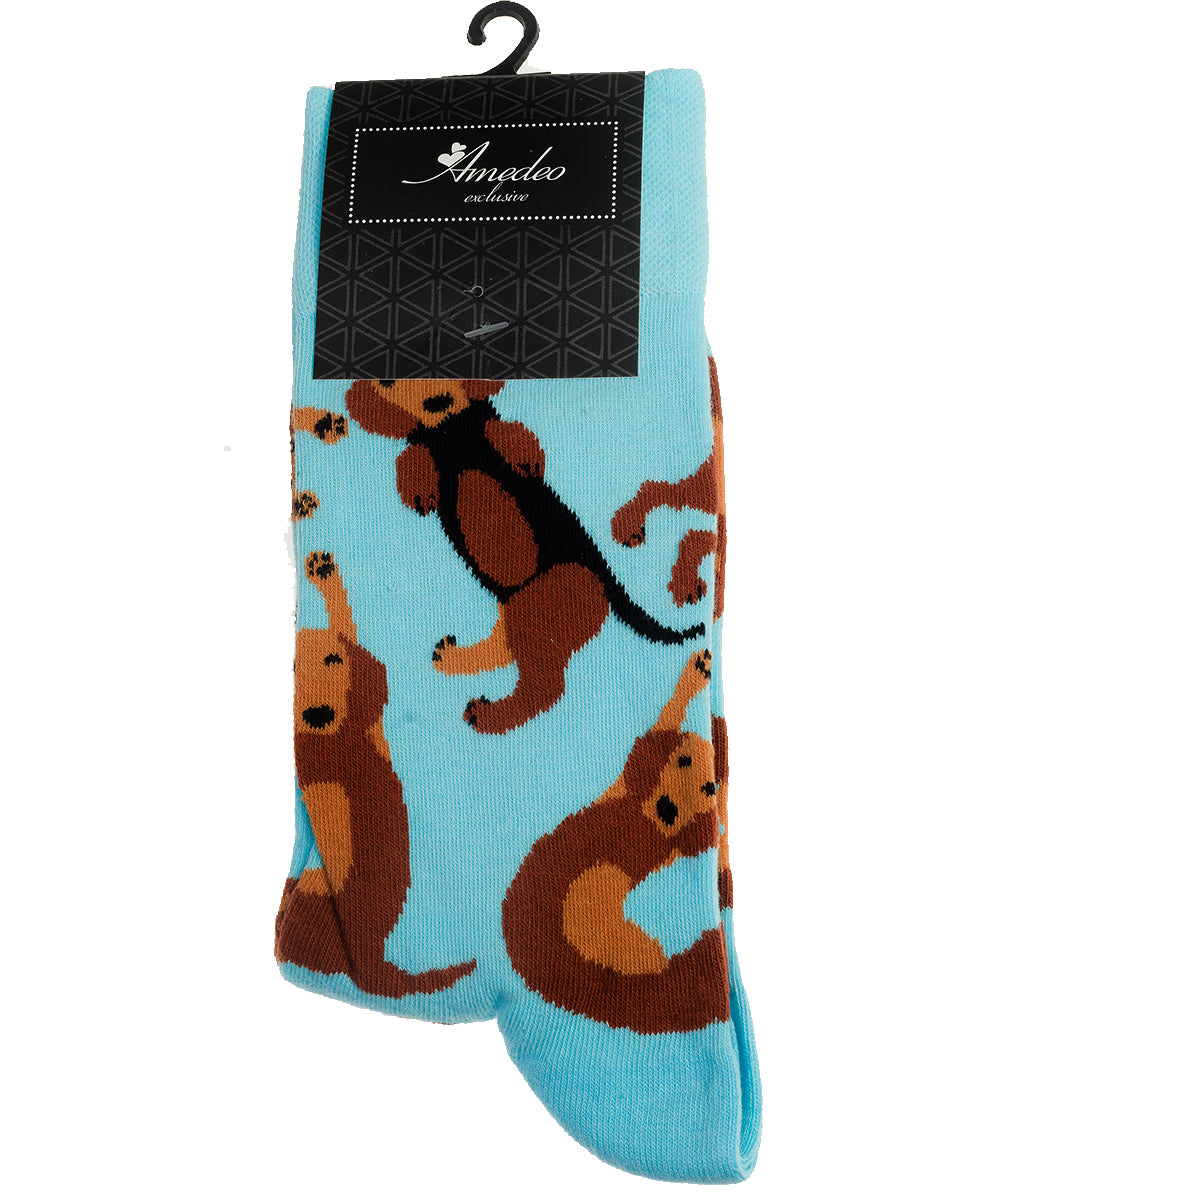 Blue Socks With Printed Dogs-European Made - Egyptian Cotton Socks - Premium Cotton Fun socks with Soft Elastic